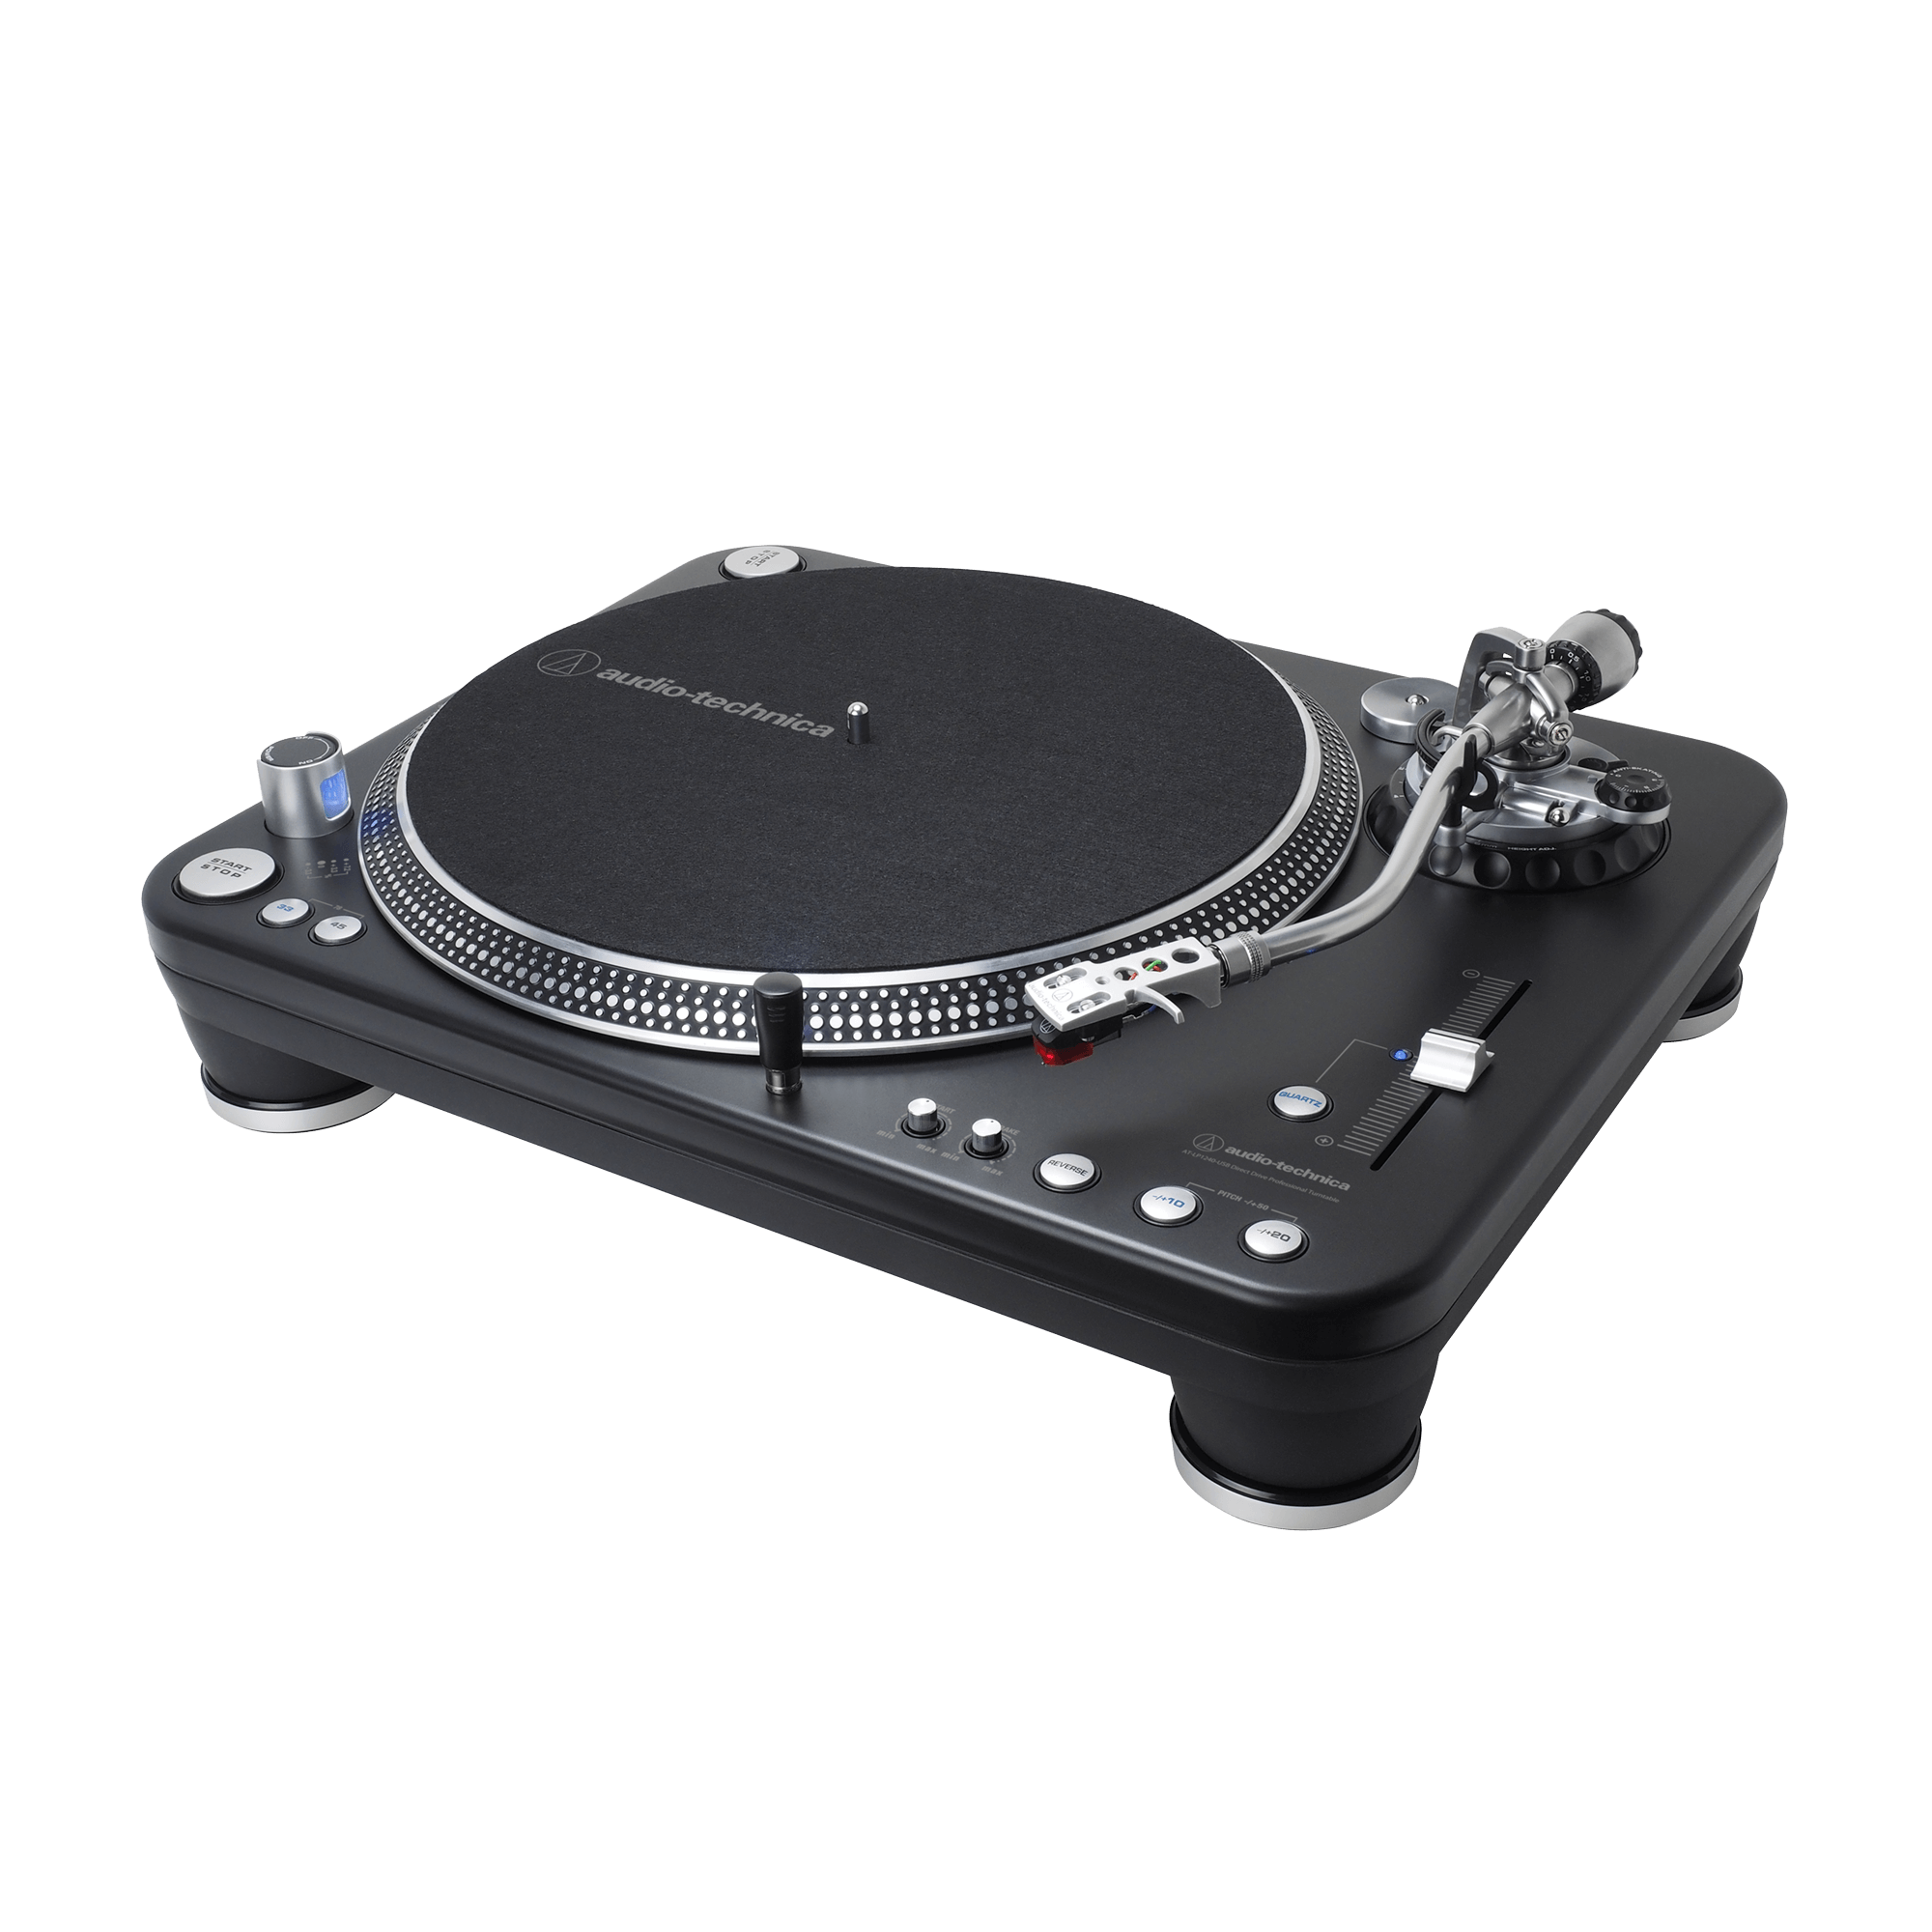 Avl lækage Ingen måde AT-LP1240-USBXP - Direct-Drive Professional DJ Turntable (USB & Analog) |  Audio-Technica